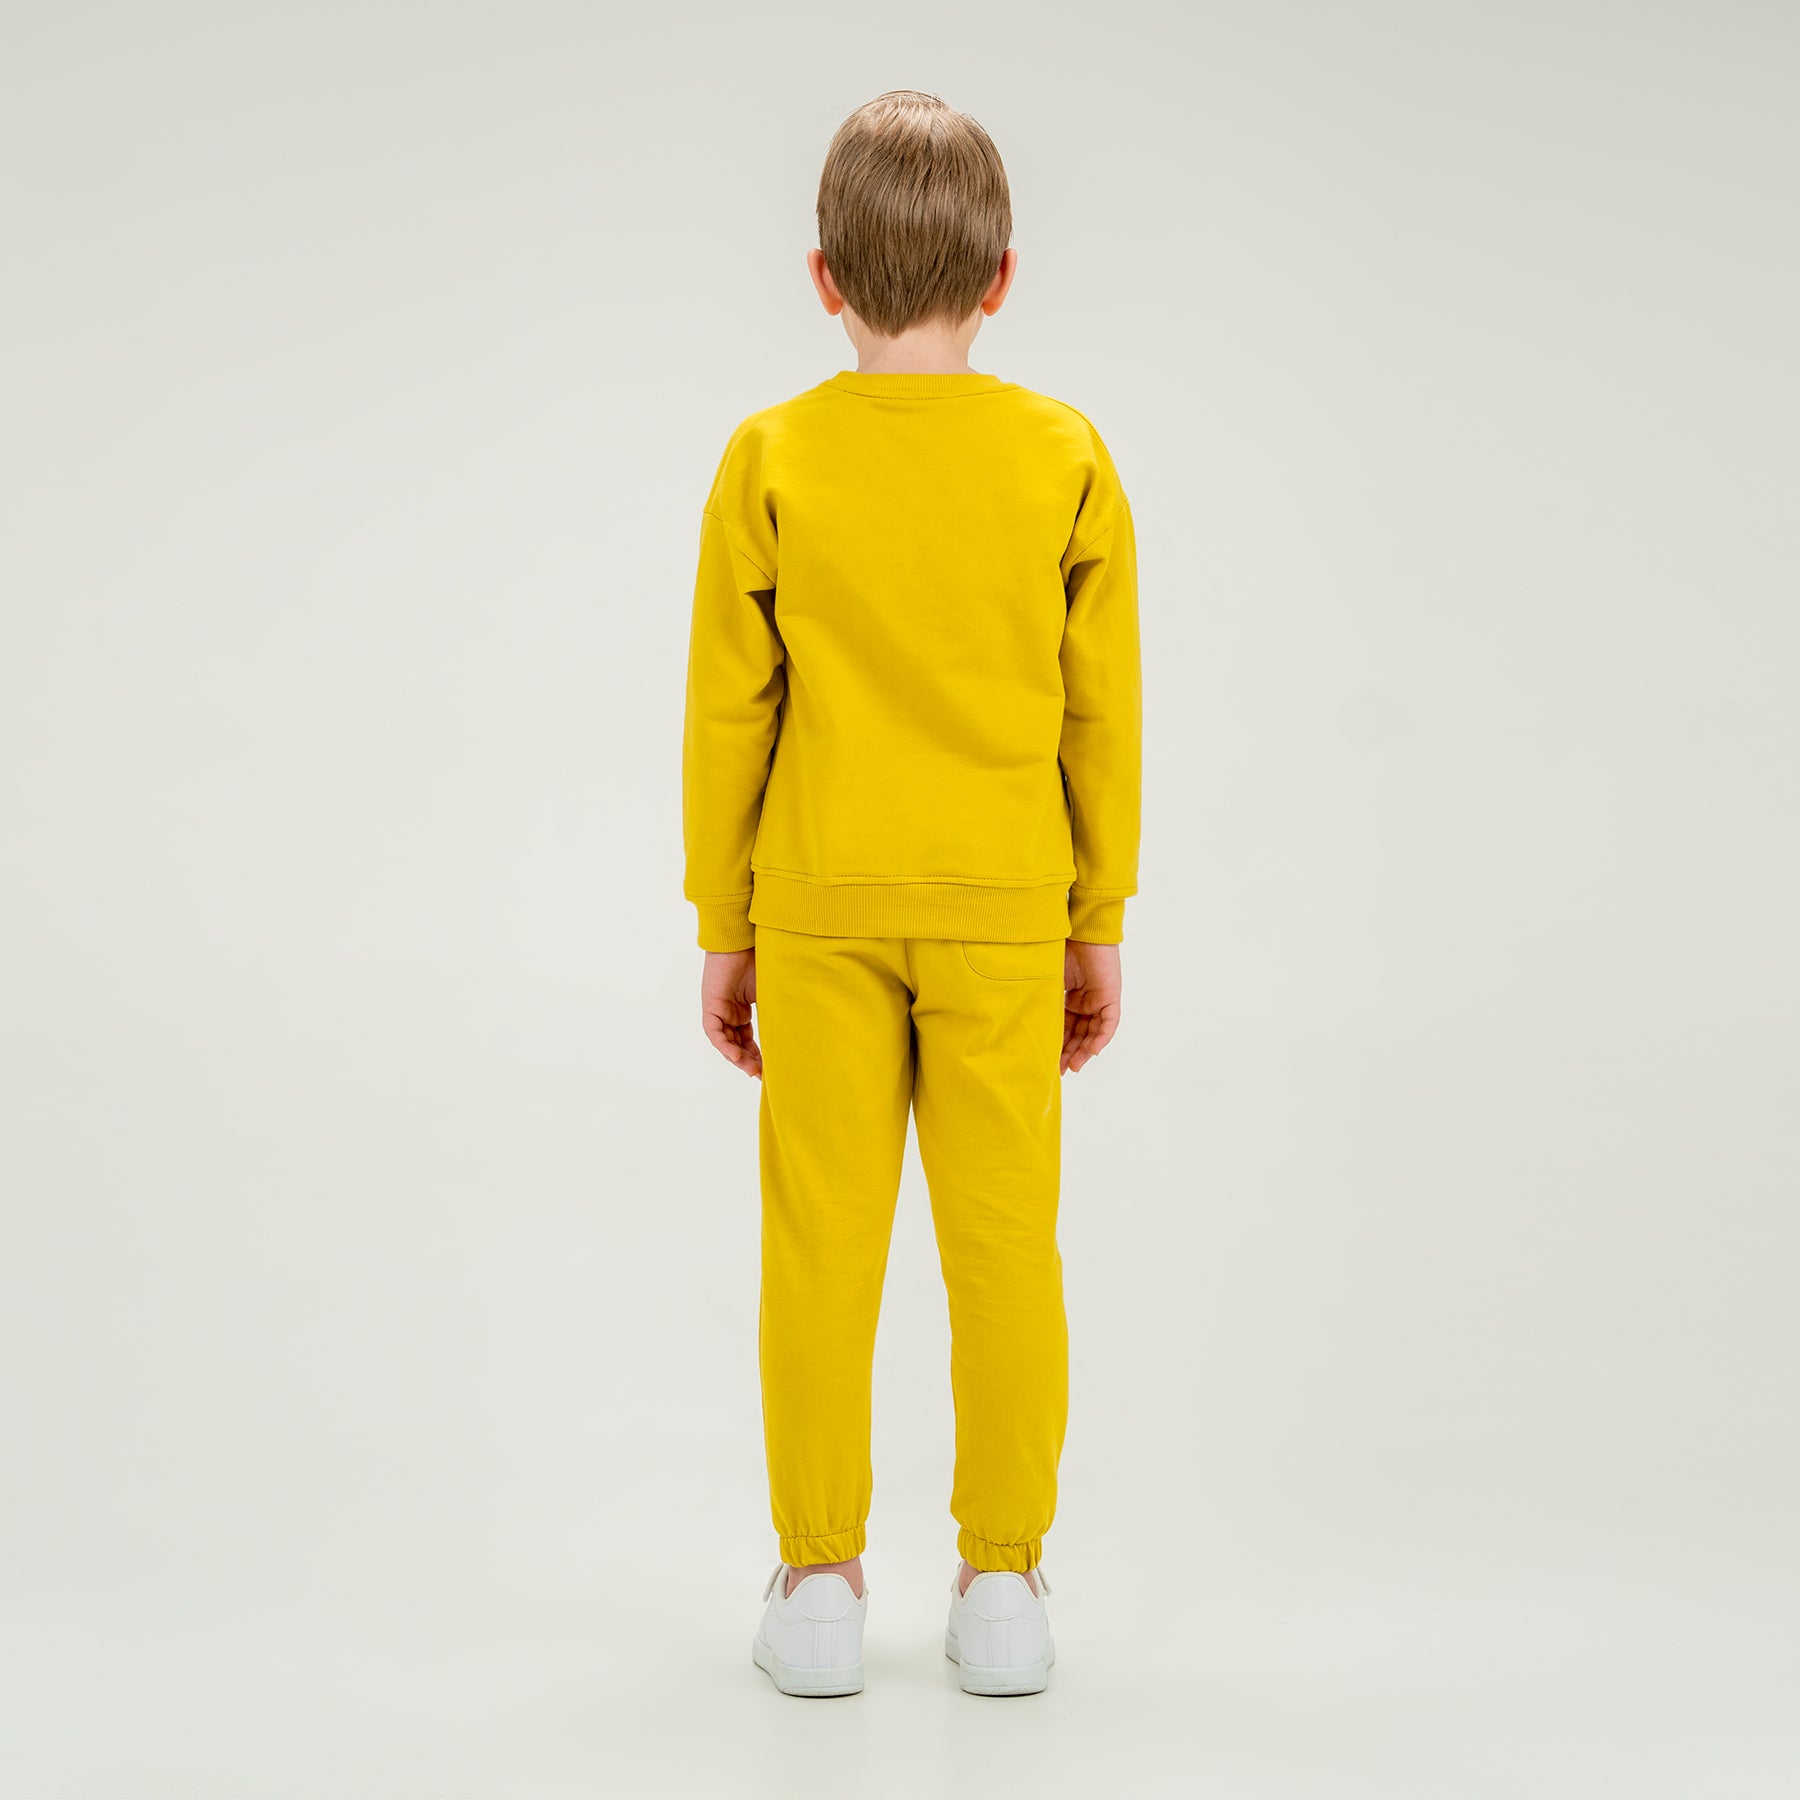 Peter England Kids Joggers, Yellow Jogger Pants for Boys at